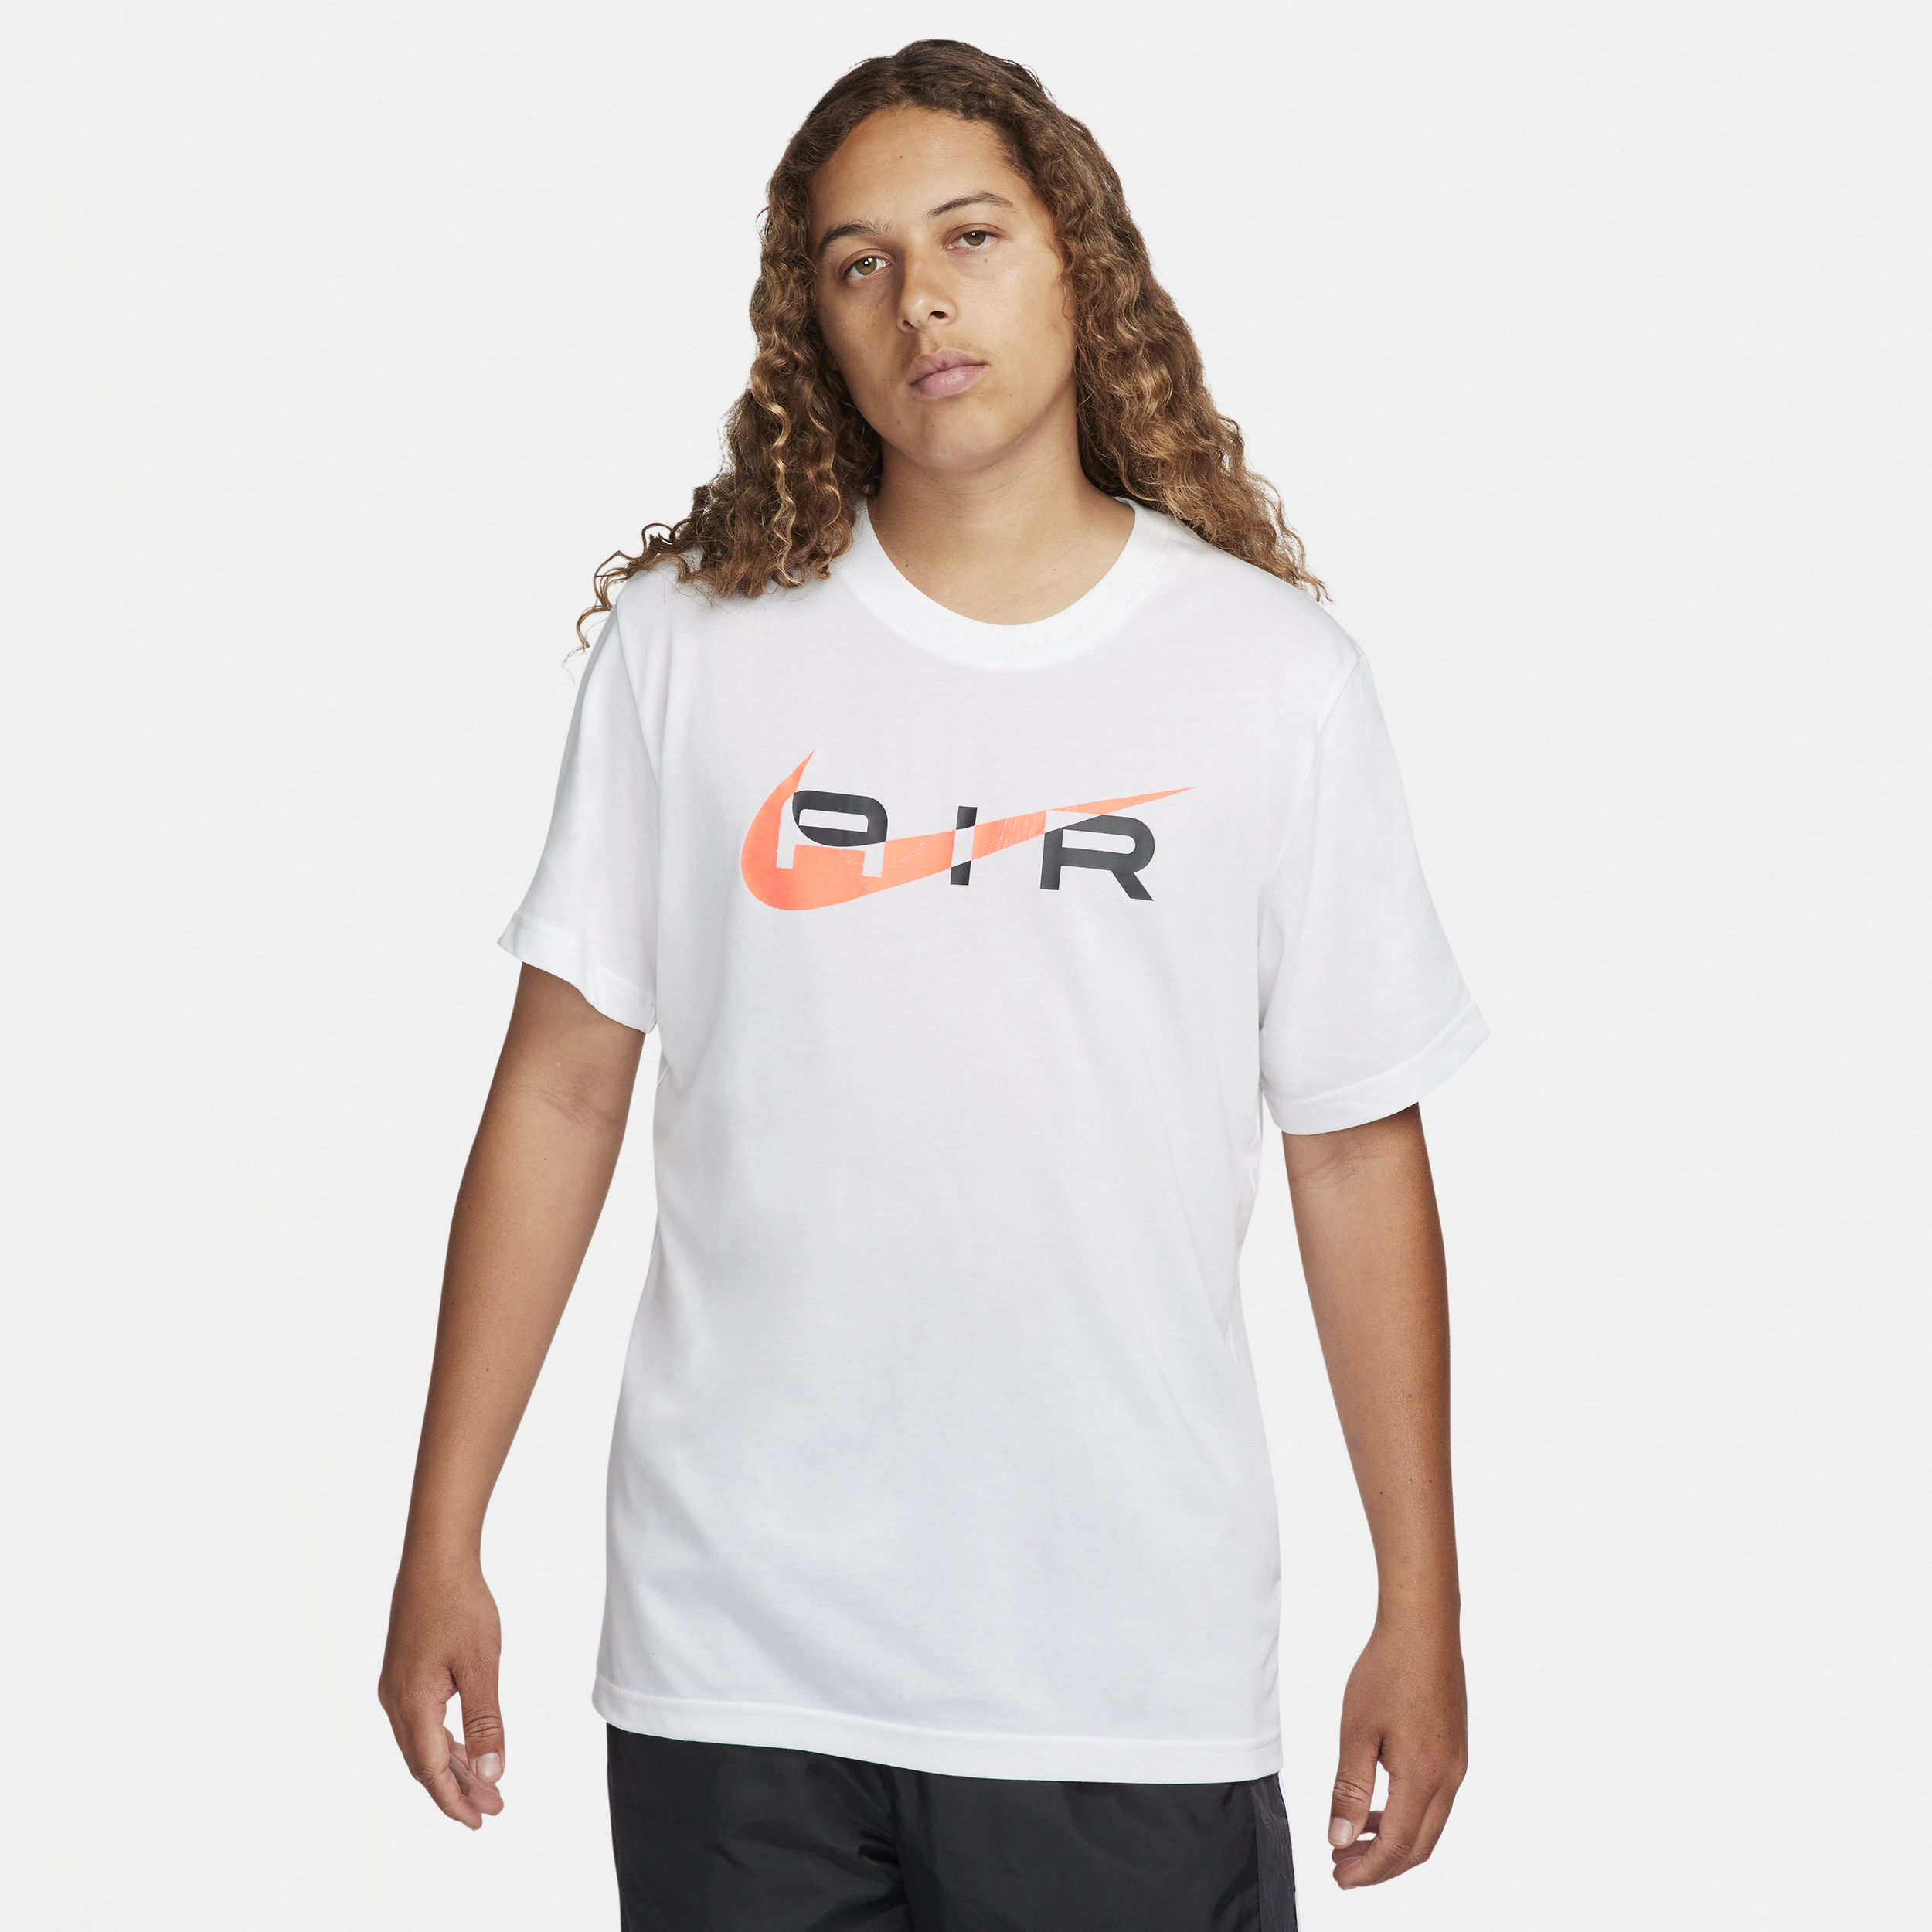 Nike Air x Marcus Rashford Camiseta - Hombre - Blanco